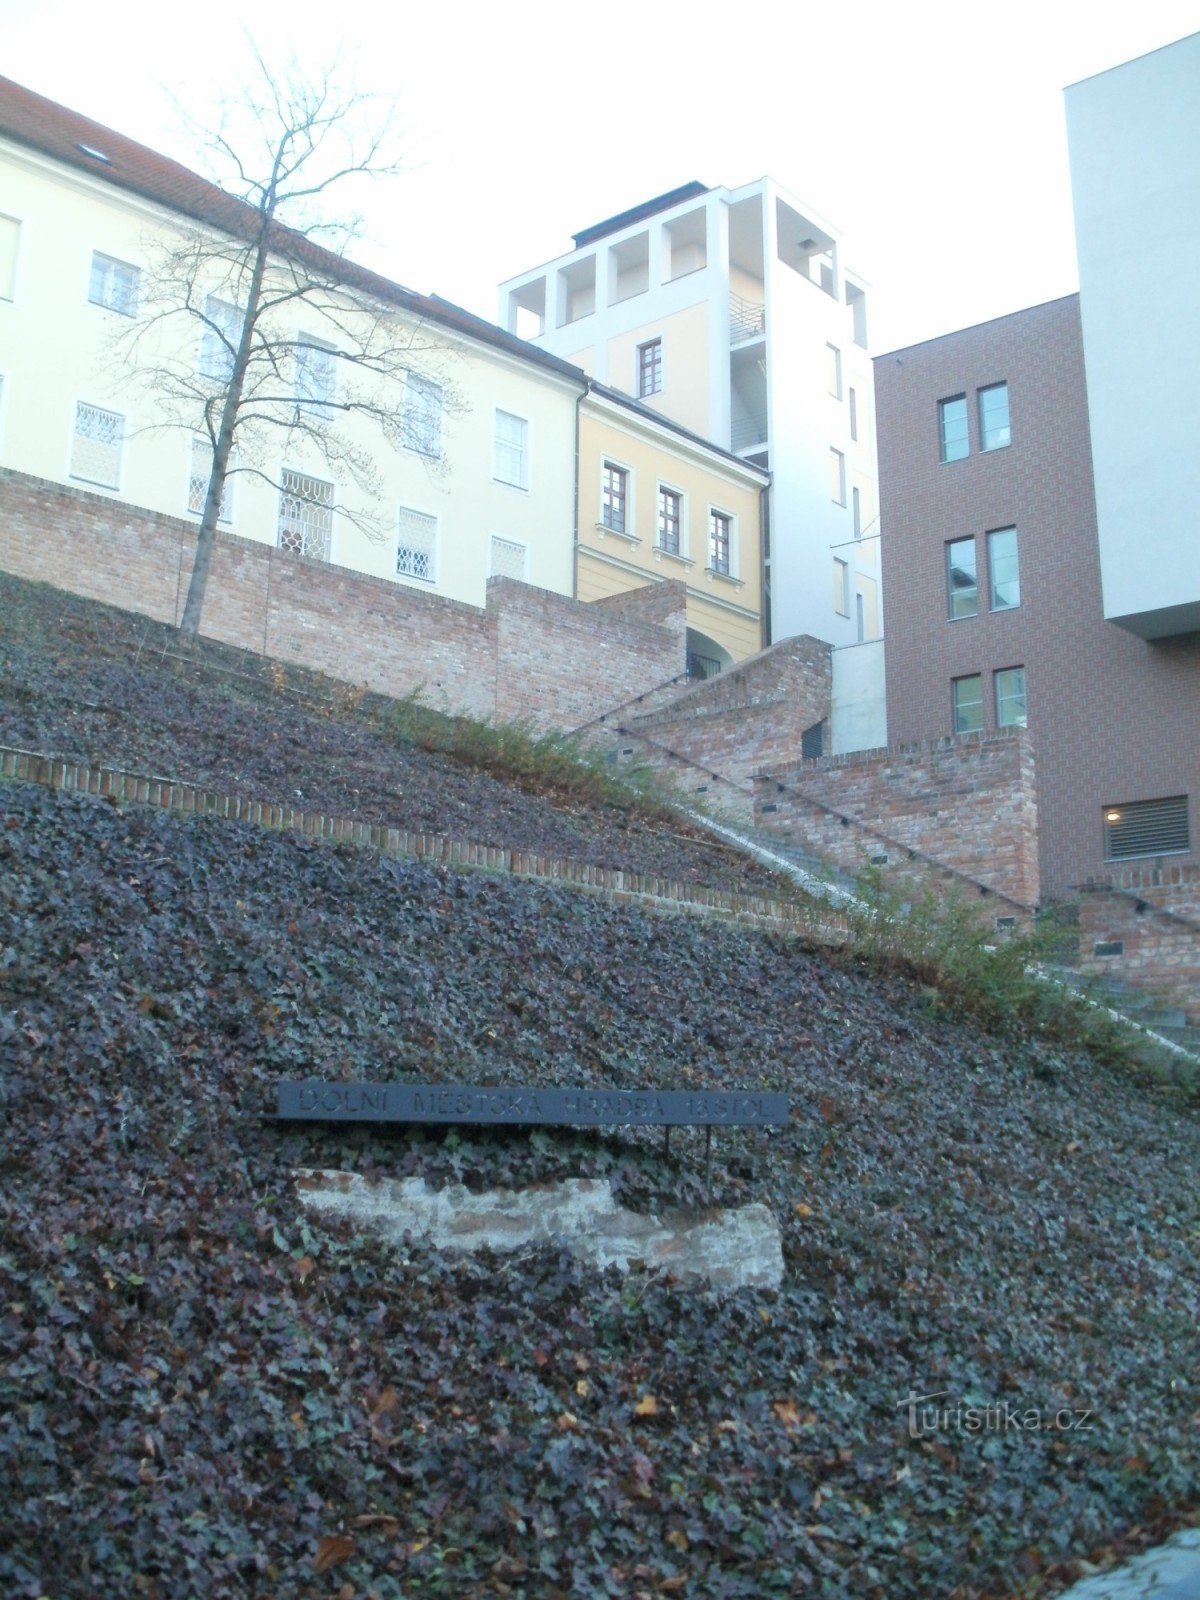 Hradec Králové - cinta muraria inferiore